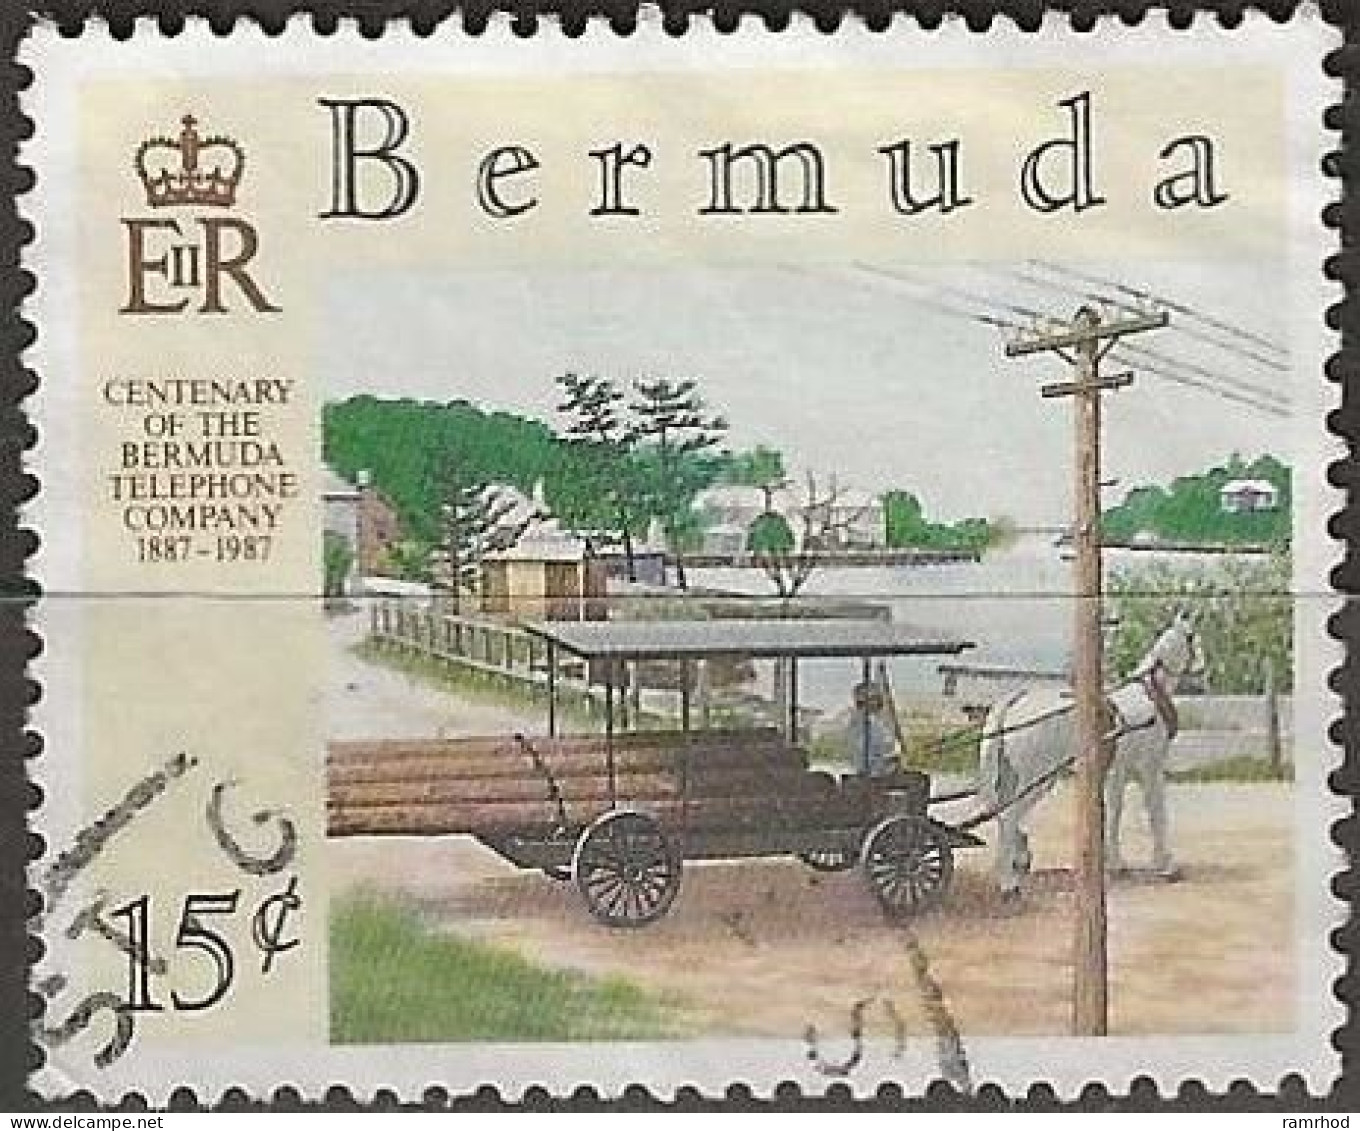 BERMUDA 1987 Centenary Of Bermuda Telephone Company - 15c. - 19th-century Wagon Carrying Telephone Poles FU - Bermudas